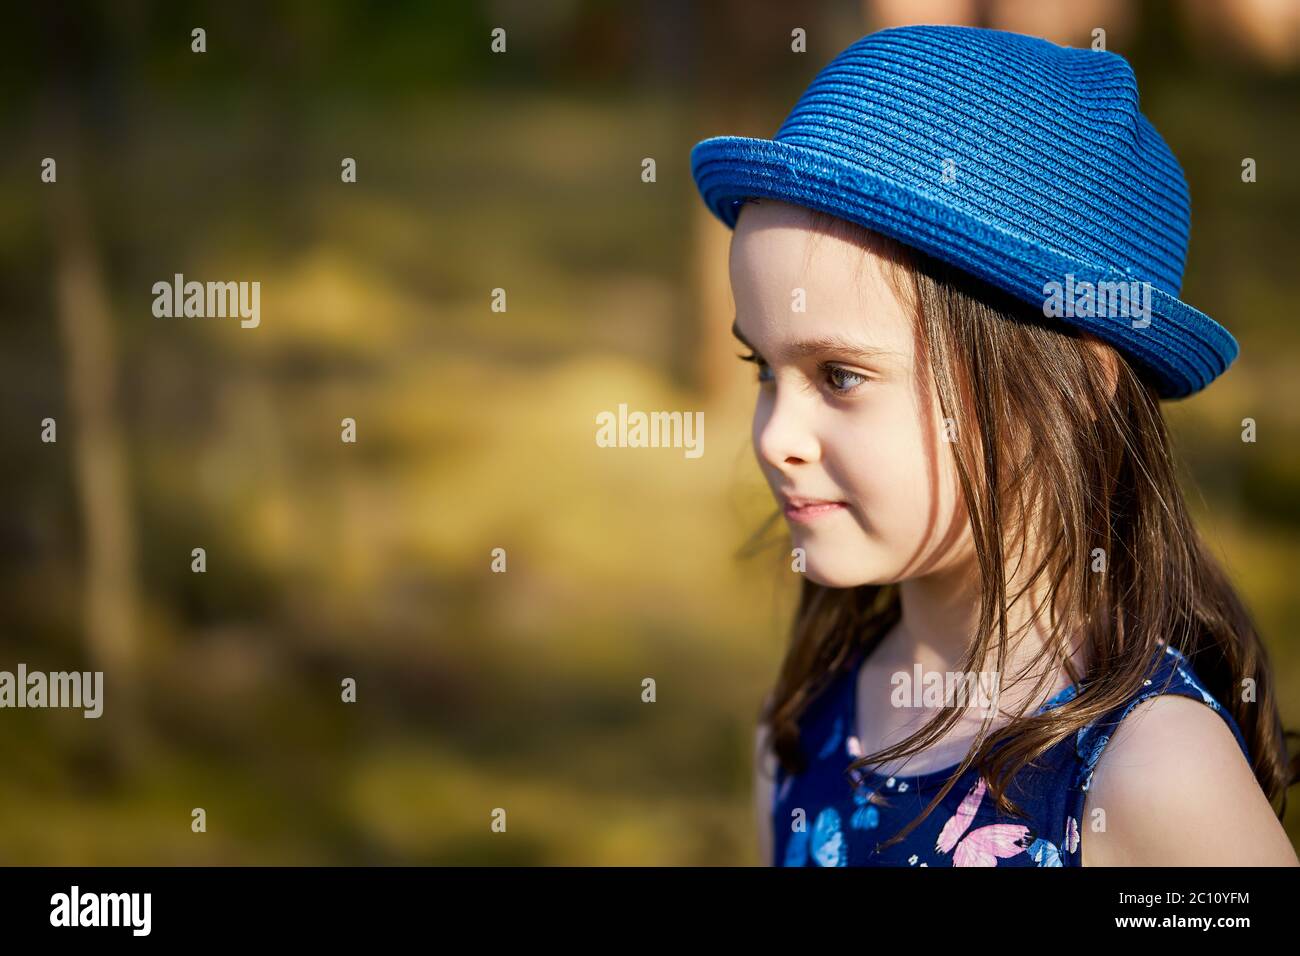 La niña del sombrero azul